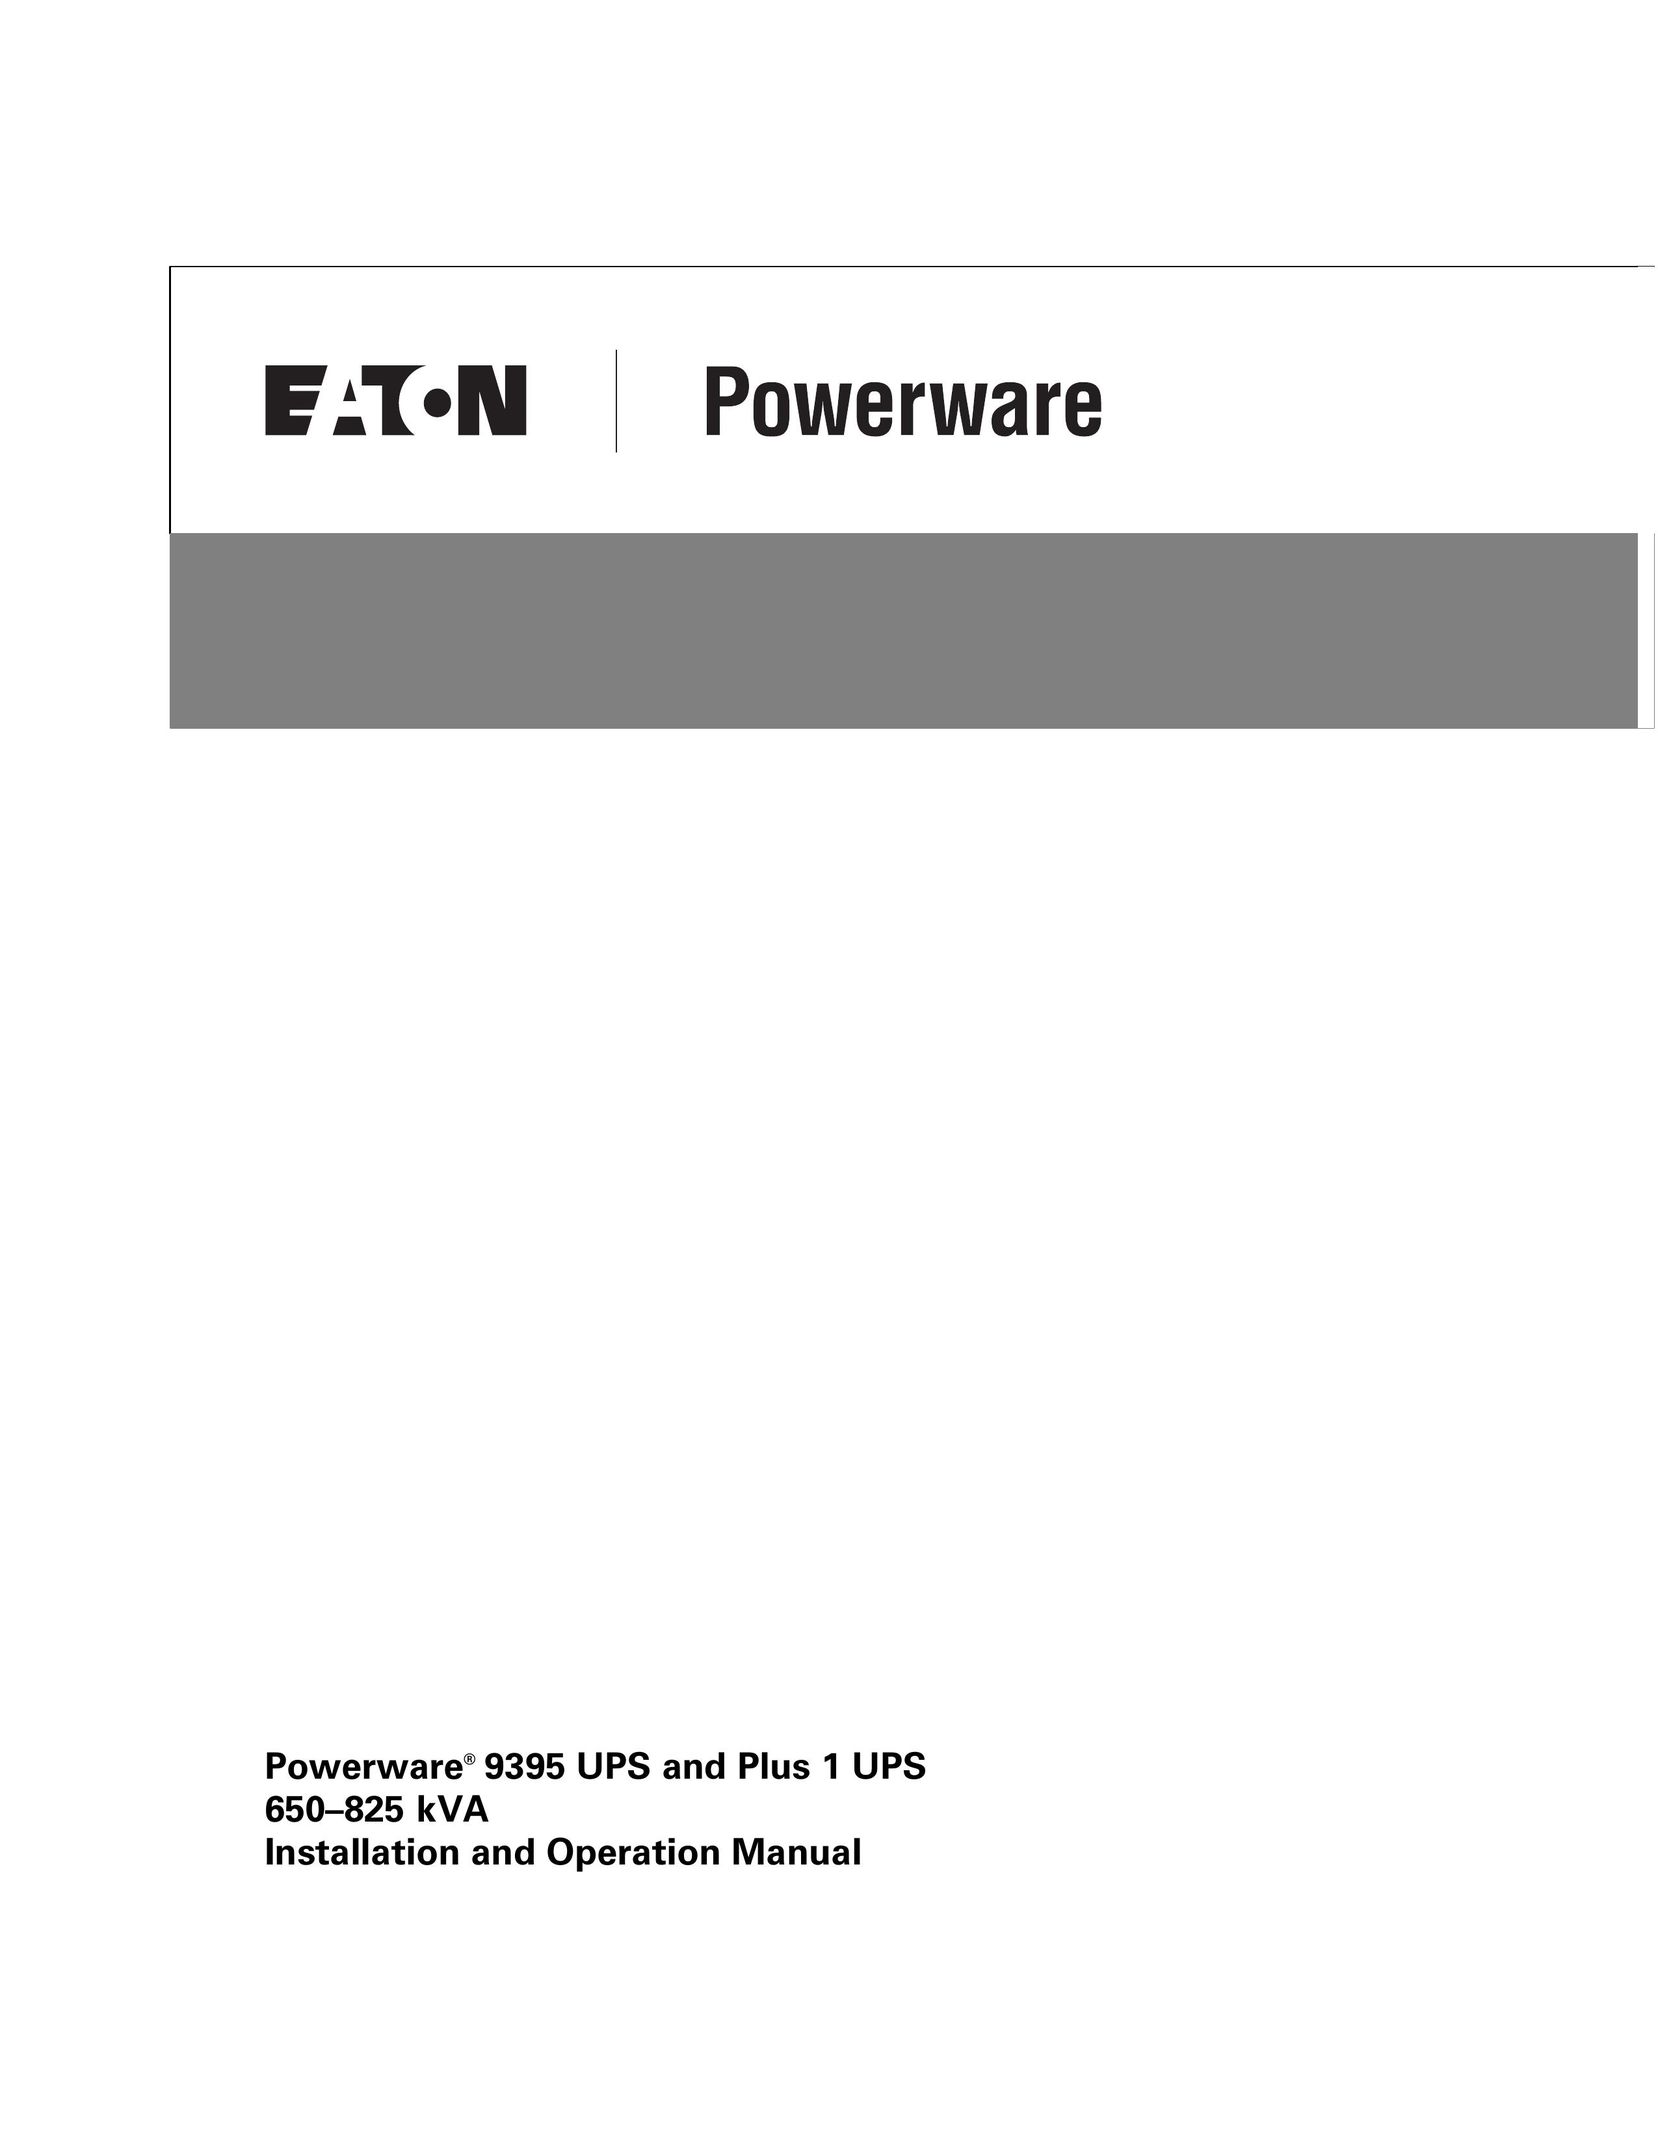 Powerware 650825 kVA Power Supply User Manual